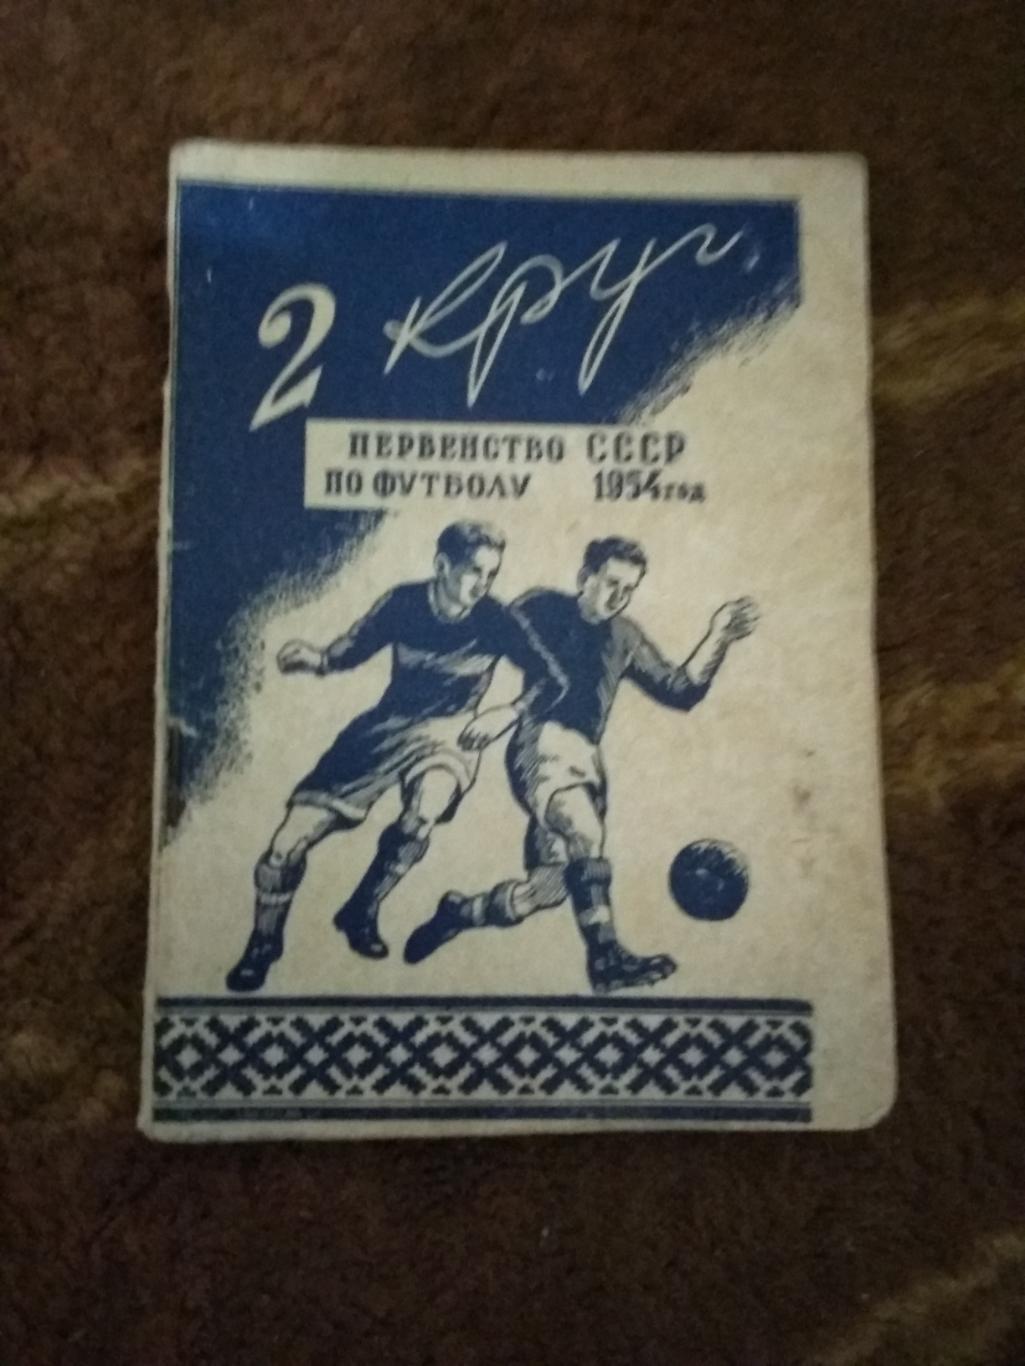 Футбол.Минск 2 круг 1954 г.